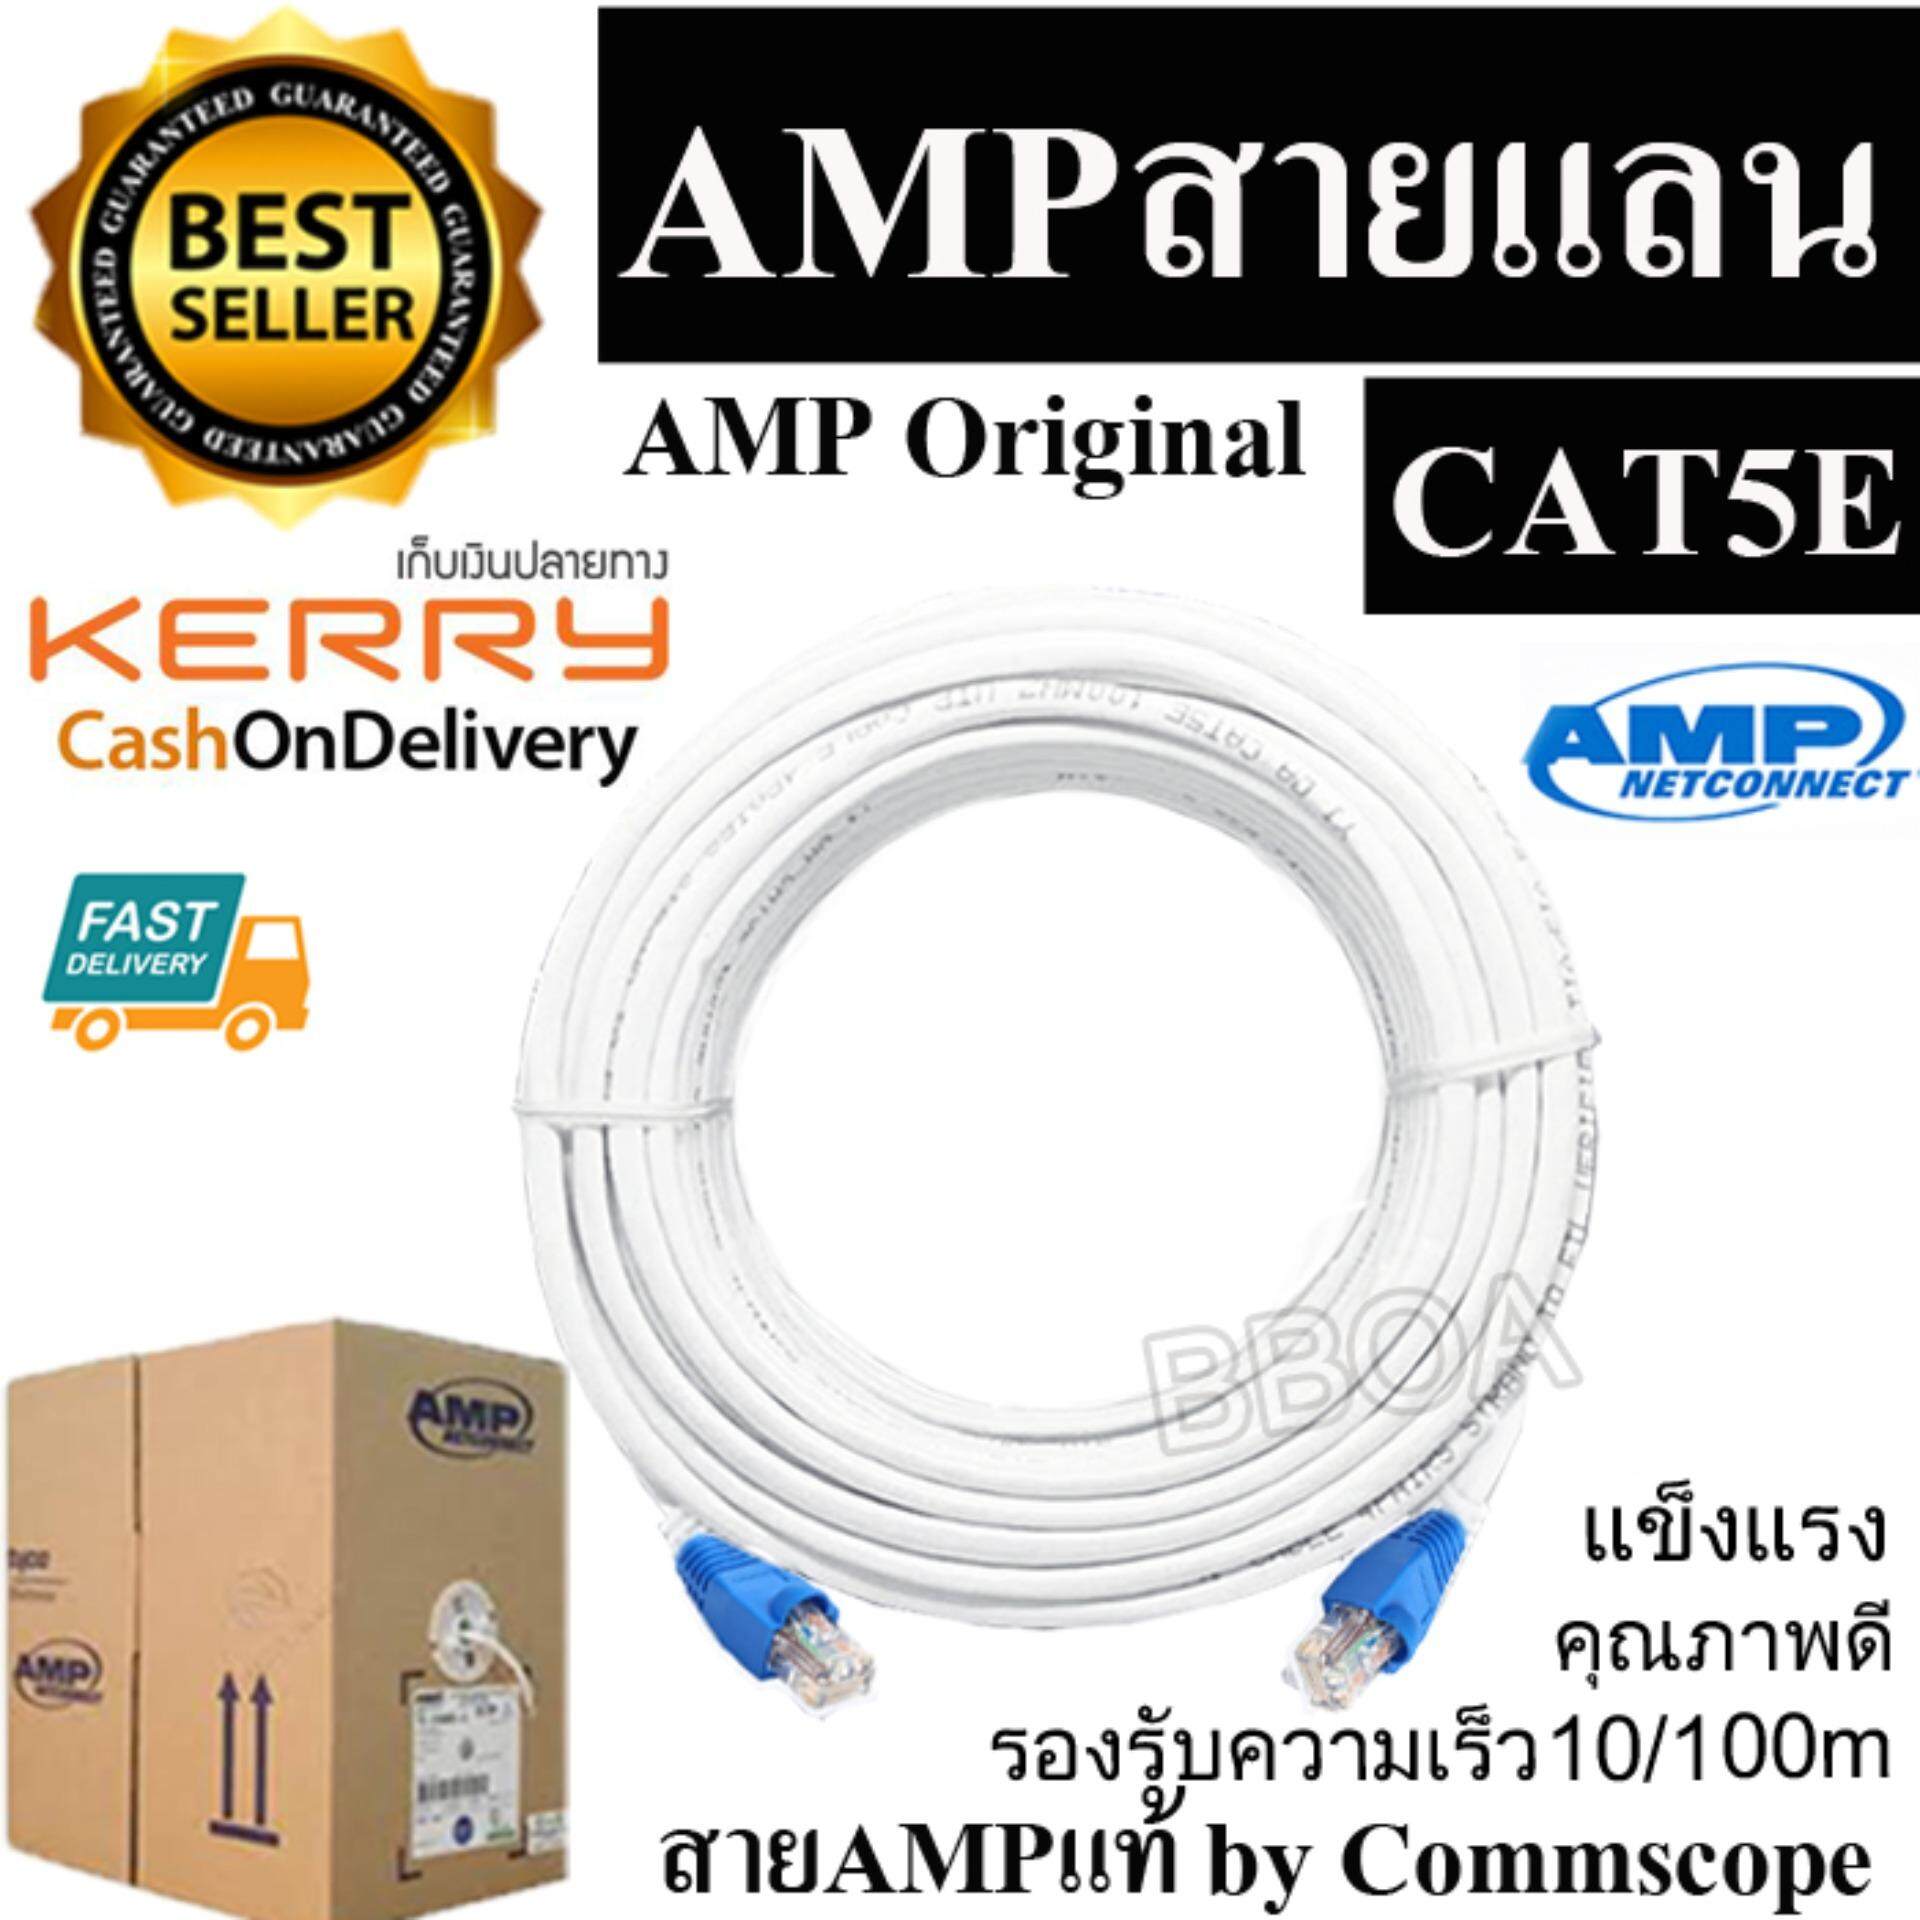 Amp Cable Lan สายแลน Cat5E 3M เข้าหัวพร้อมใช้งาน สายยาว3เมตร(ขาว) |  Lazada.Co.Th